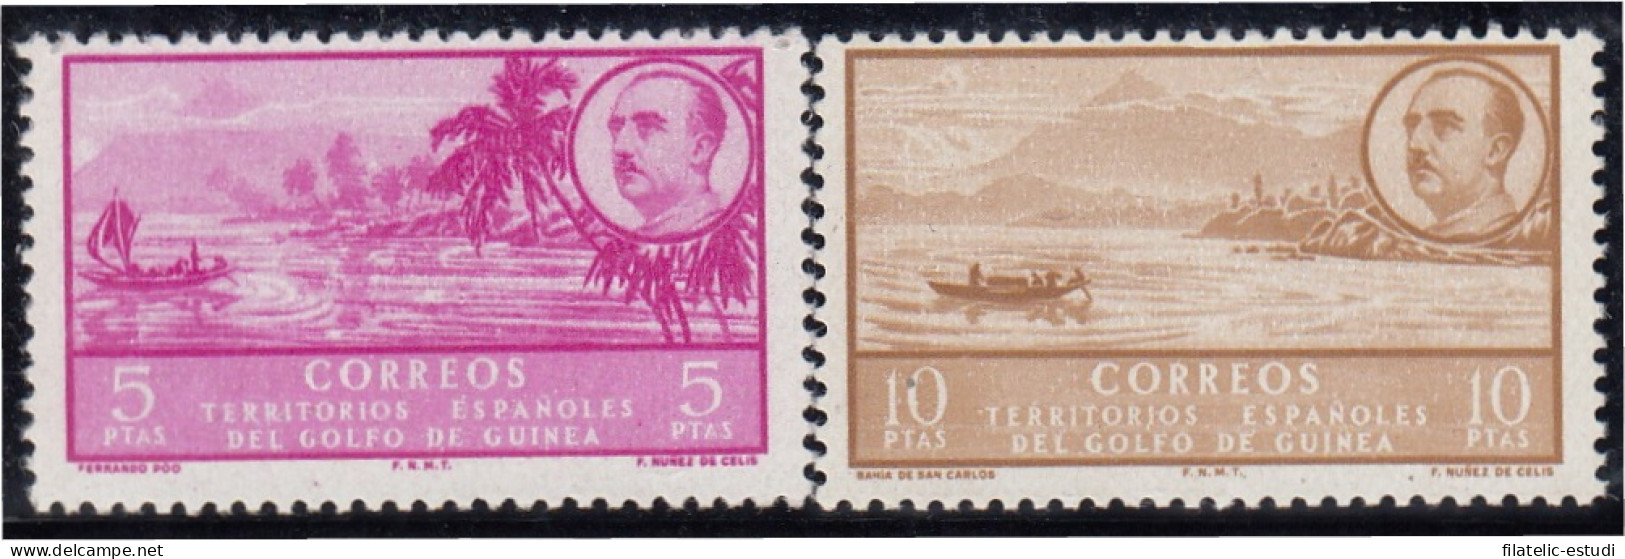 Guinea Española 291/92 1949/50 ( 277/93) Paisajes Franco MNH - Guinea Española